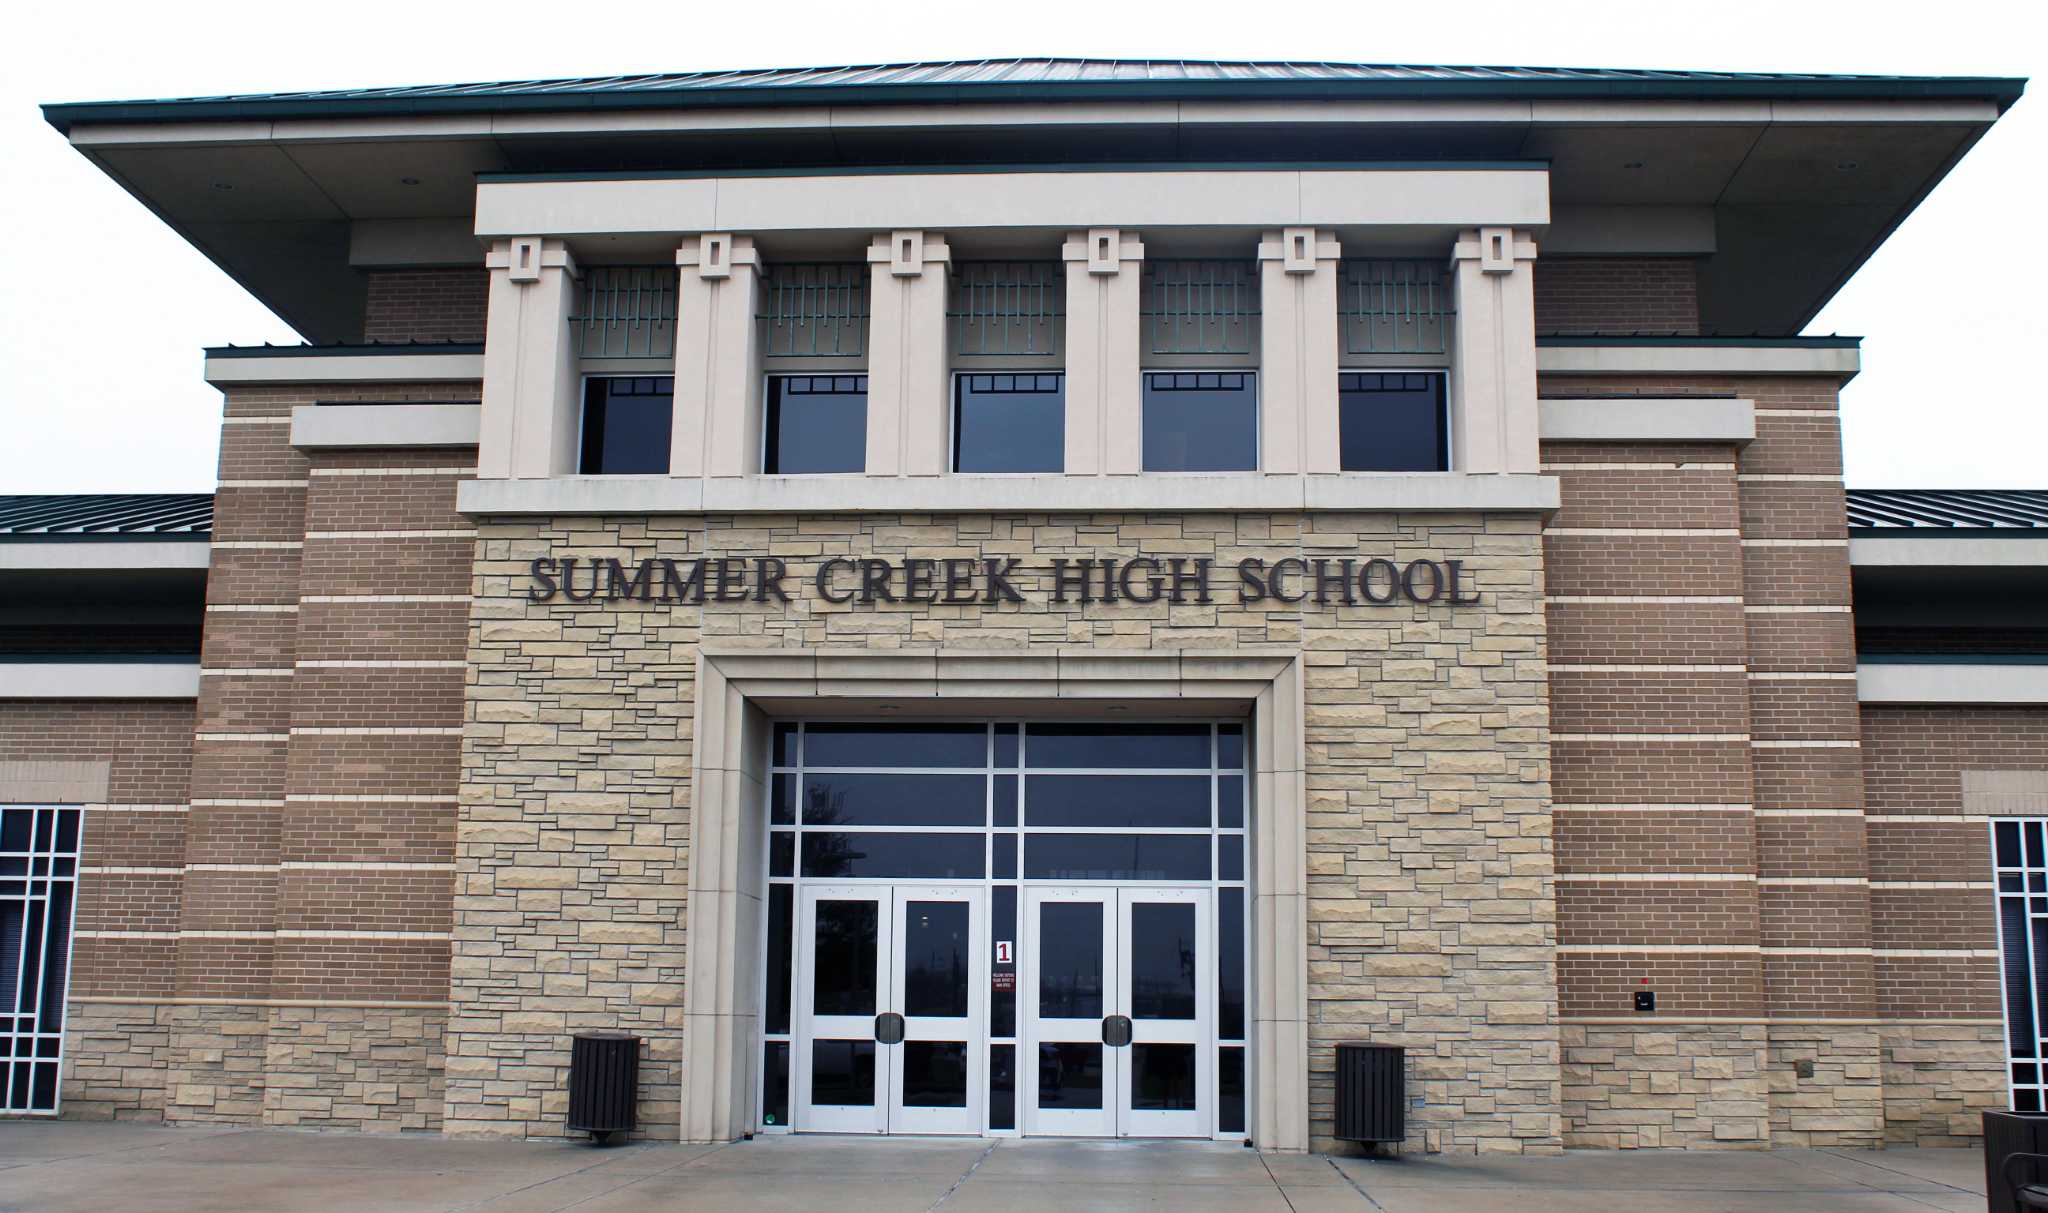 Summer Creek High School seeks to continue condensed pilot schedule